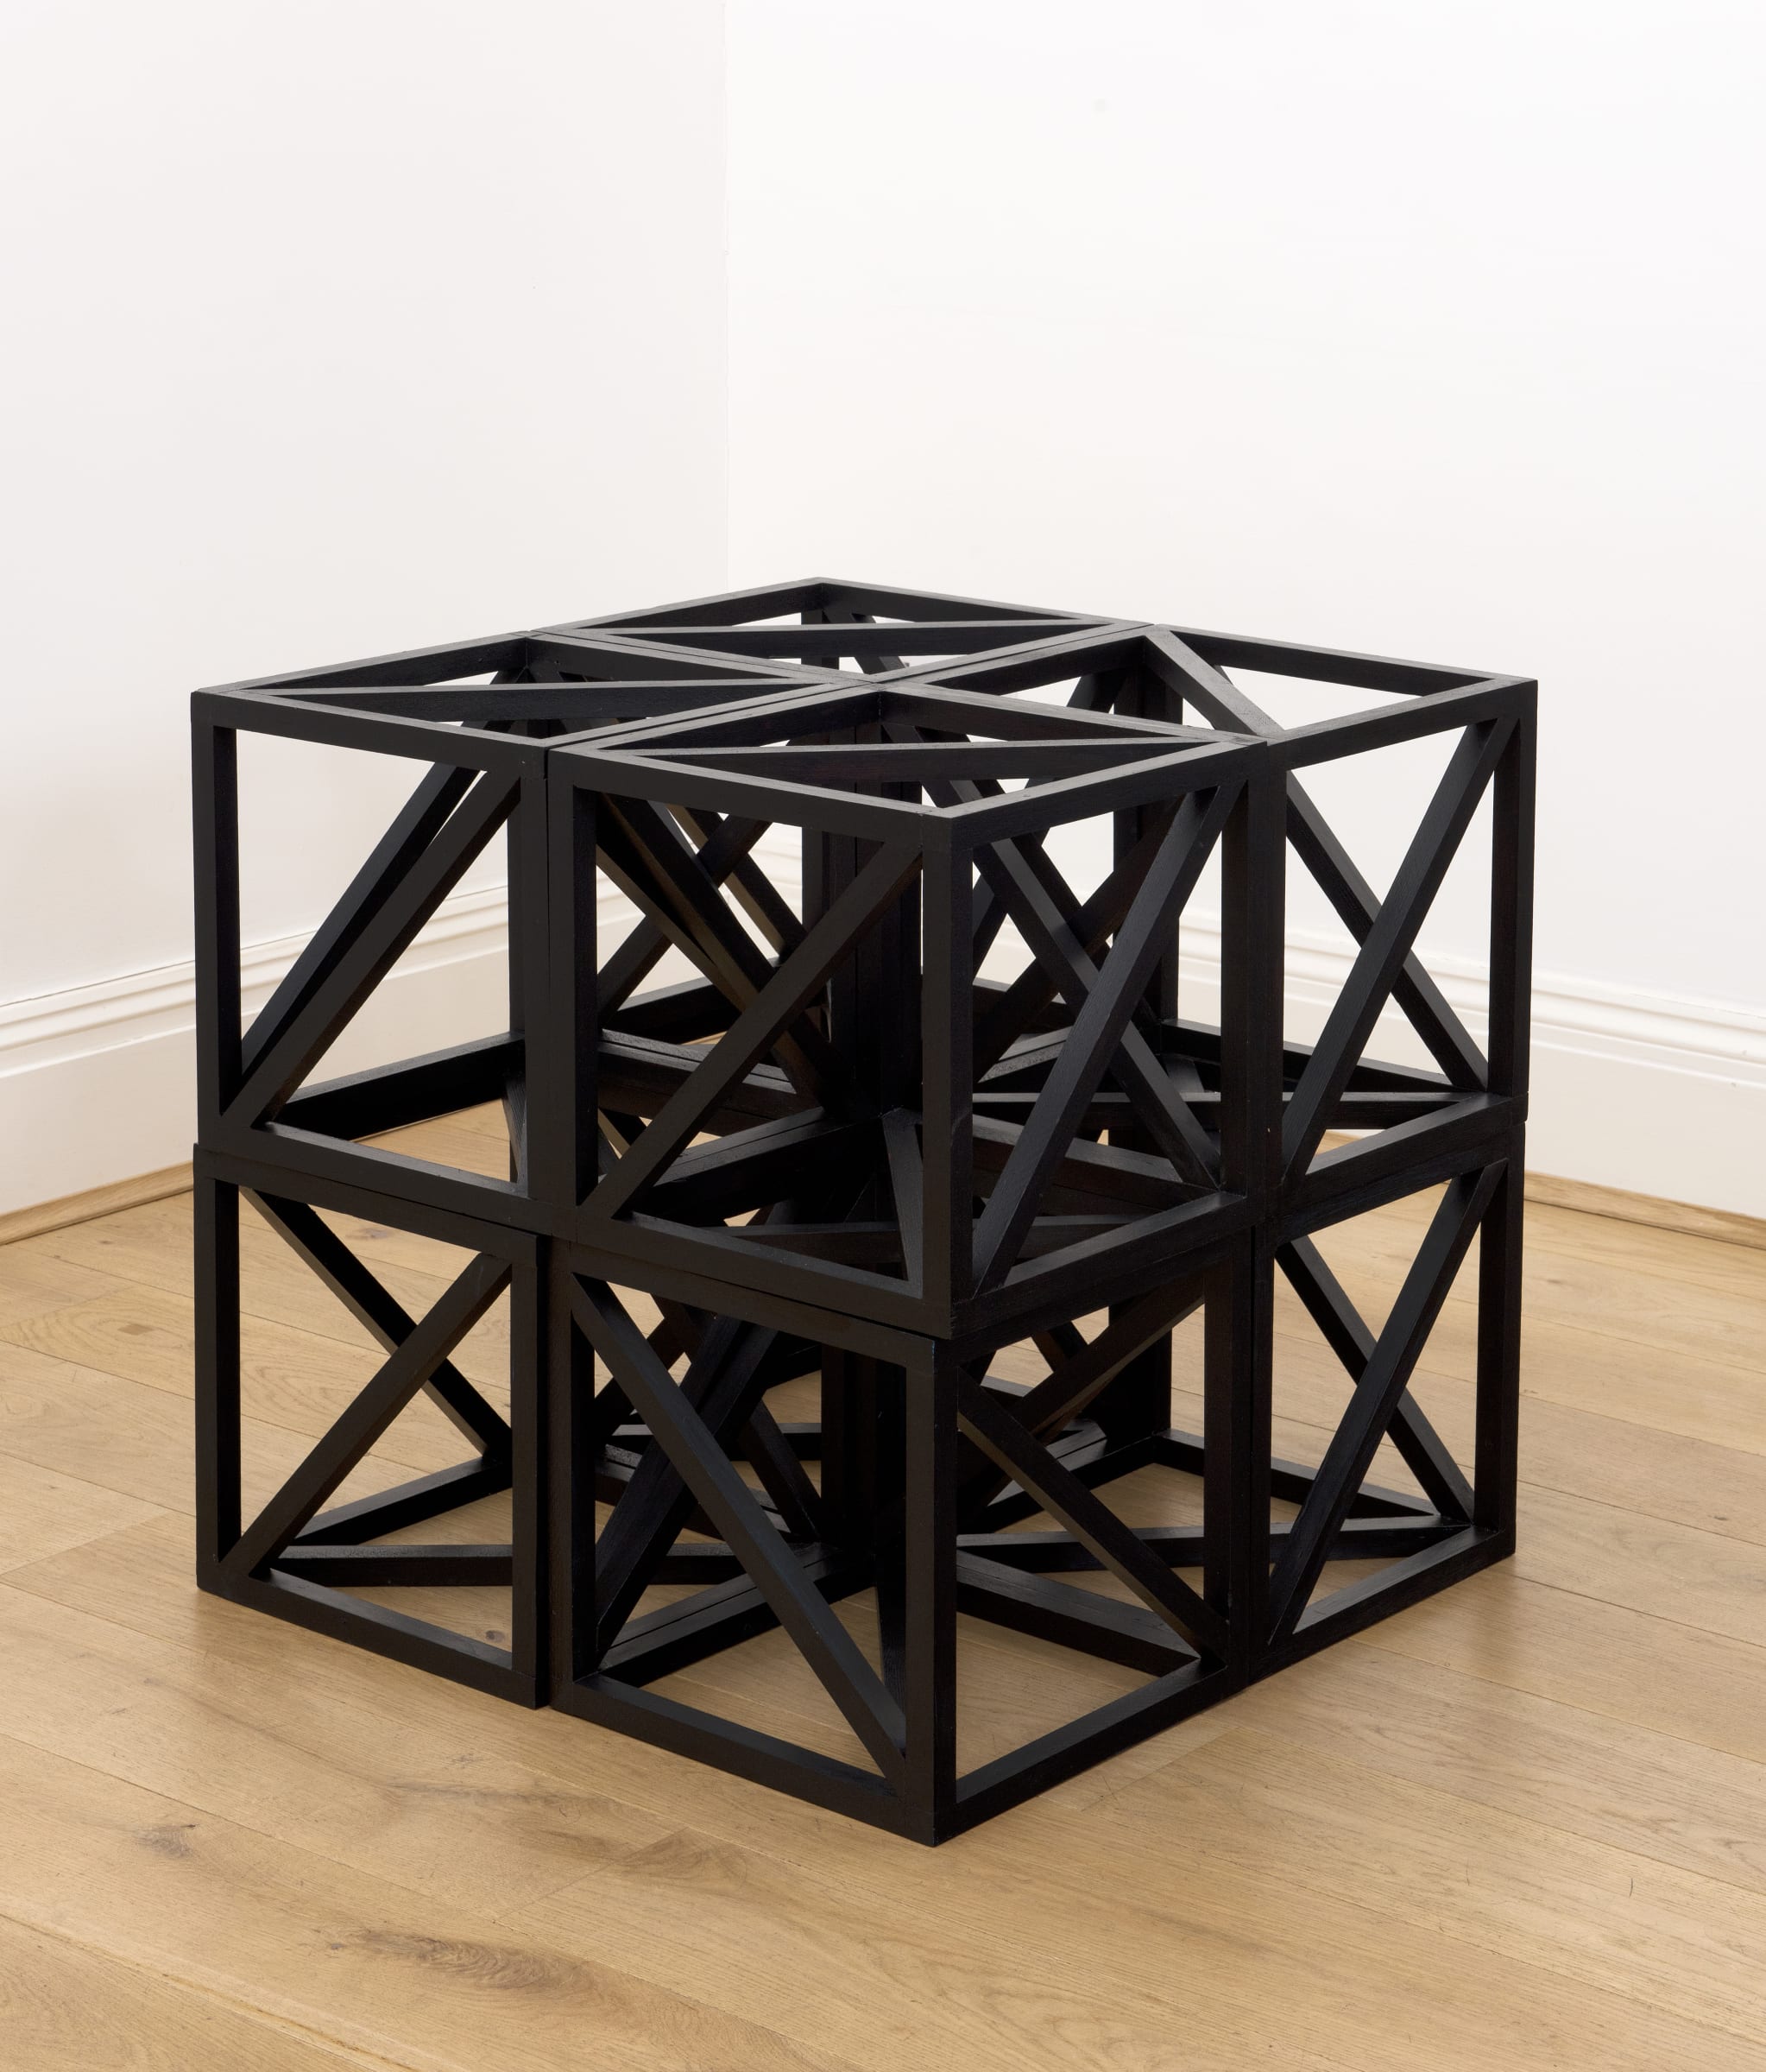 Rasheed Araeen, Small Black Cube: 24 x 24 24 2019 Grosvenor Gallery